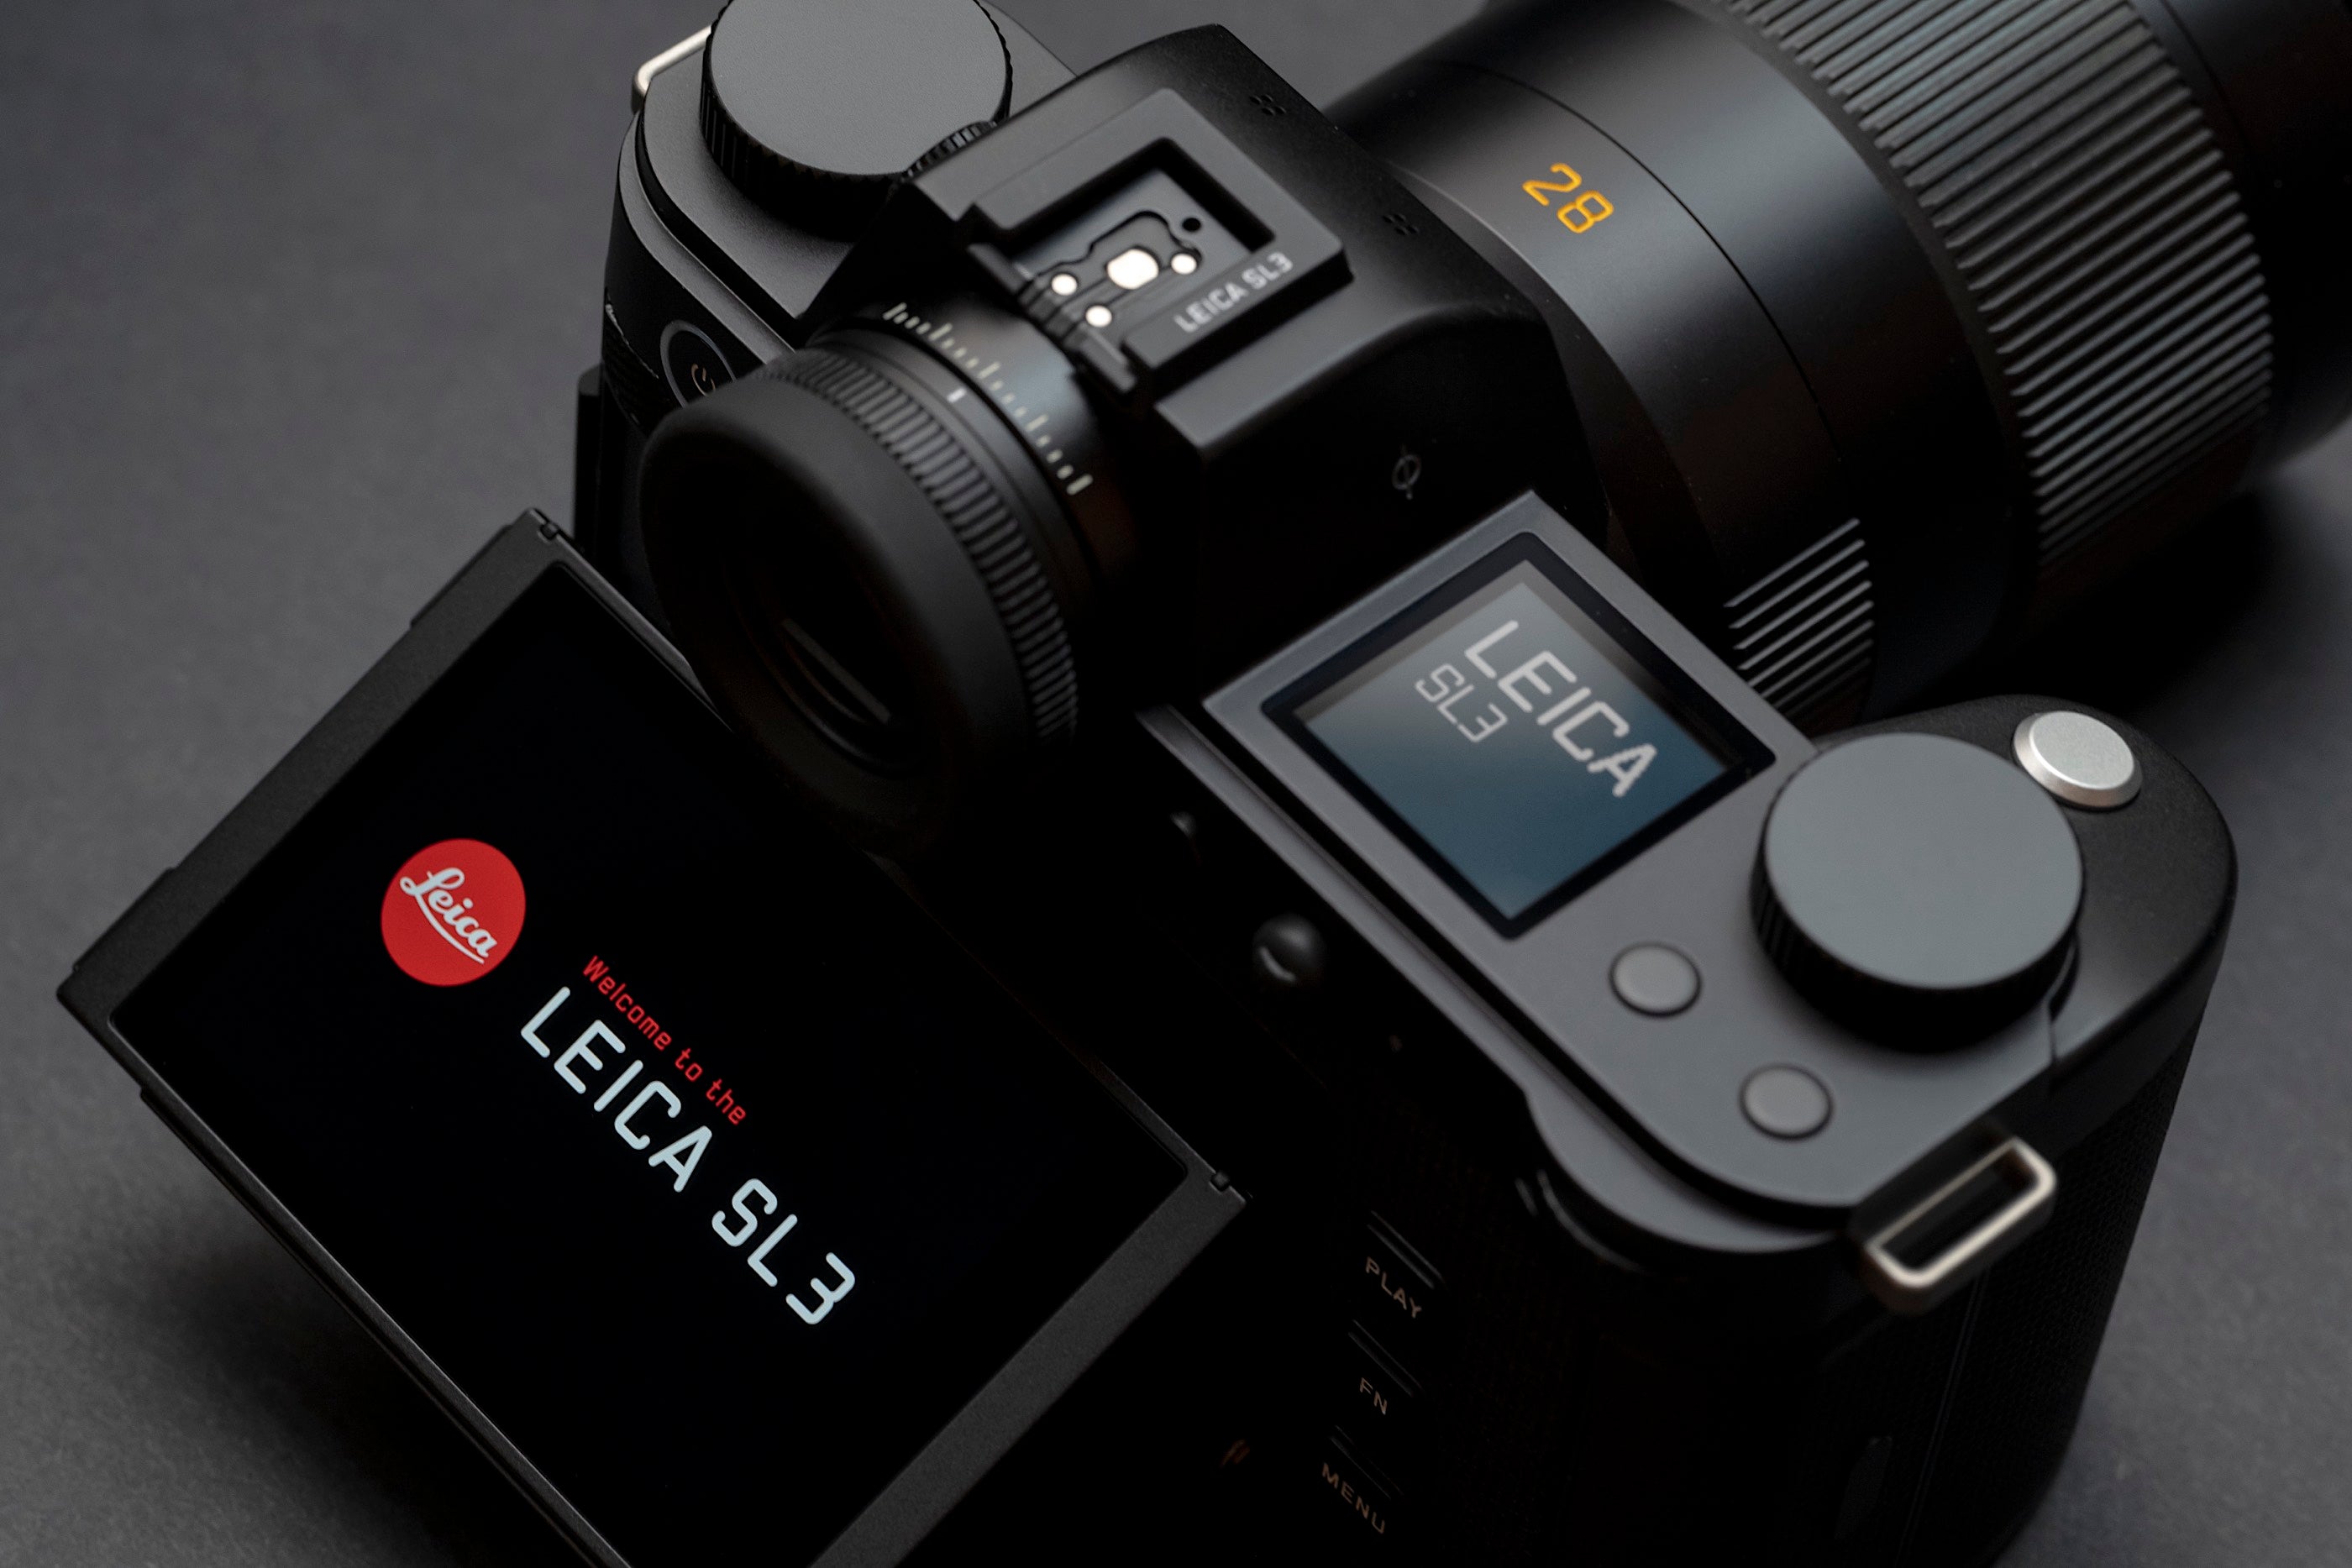 The Leica SL3